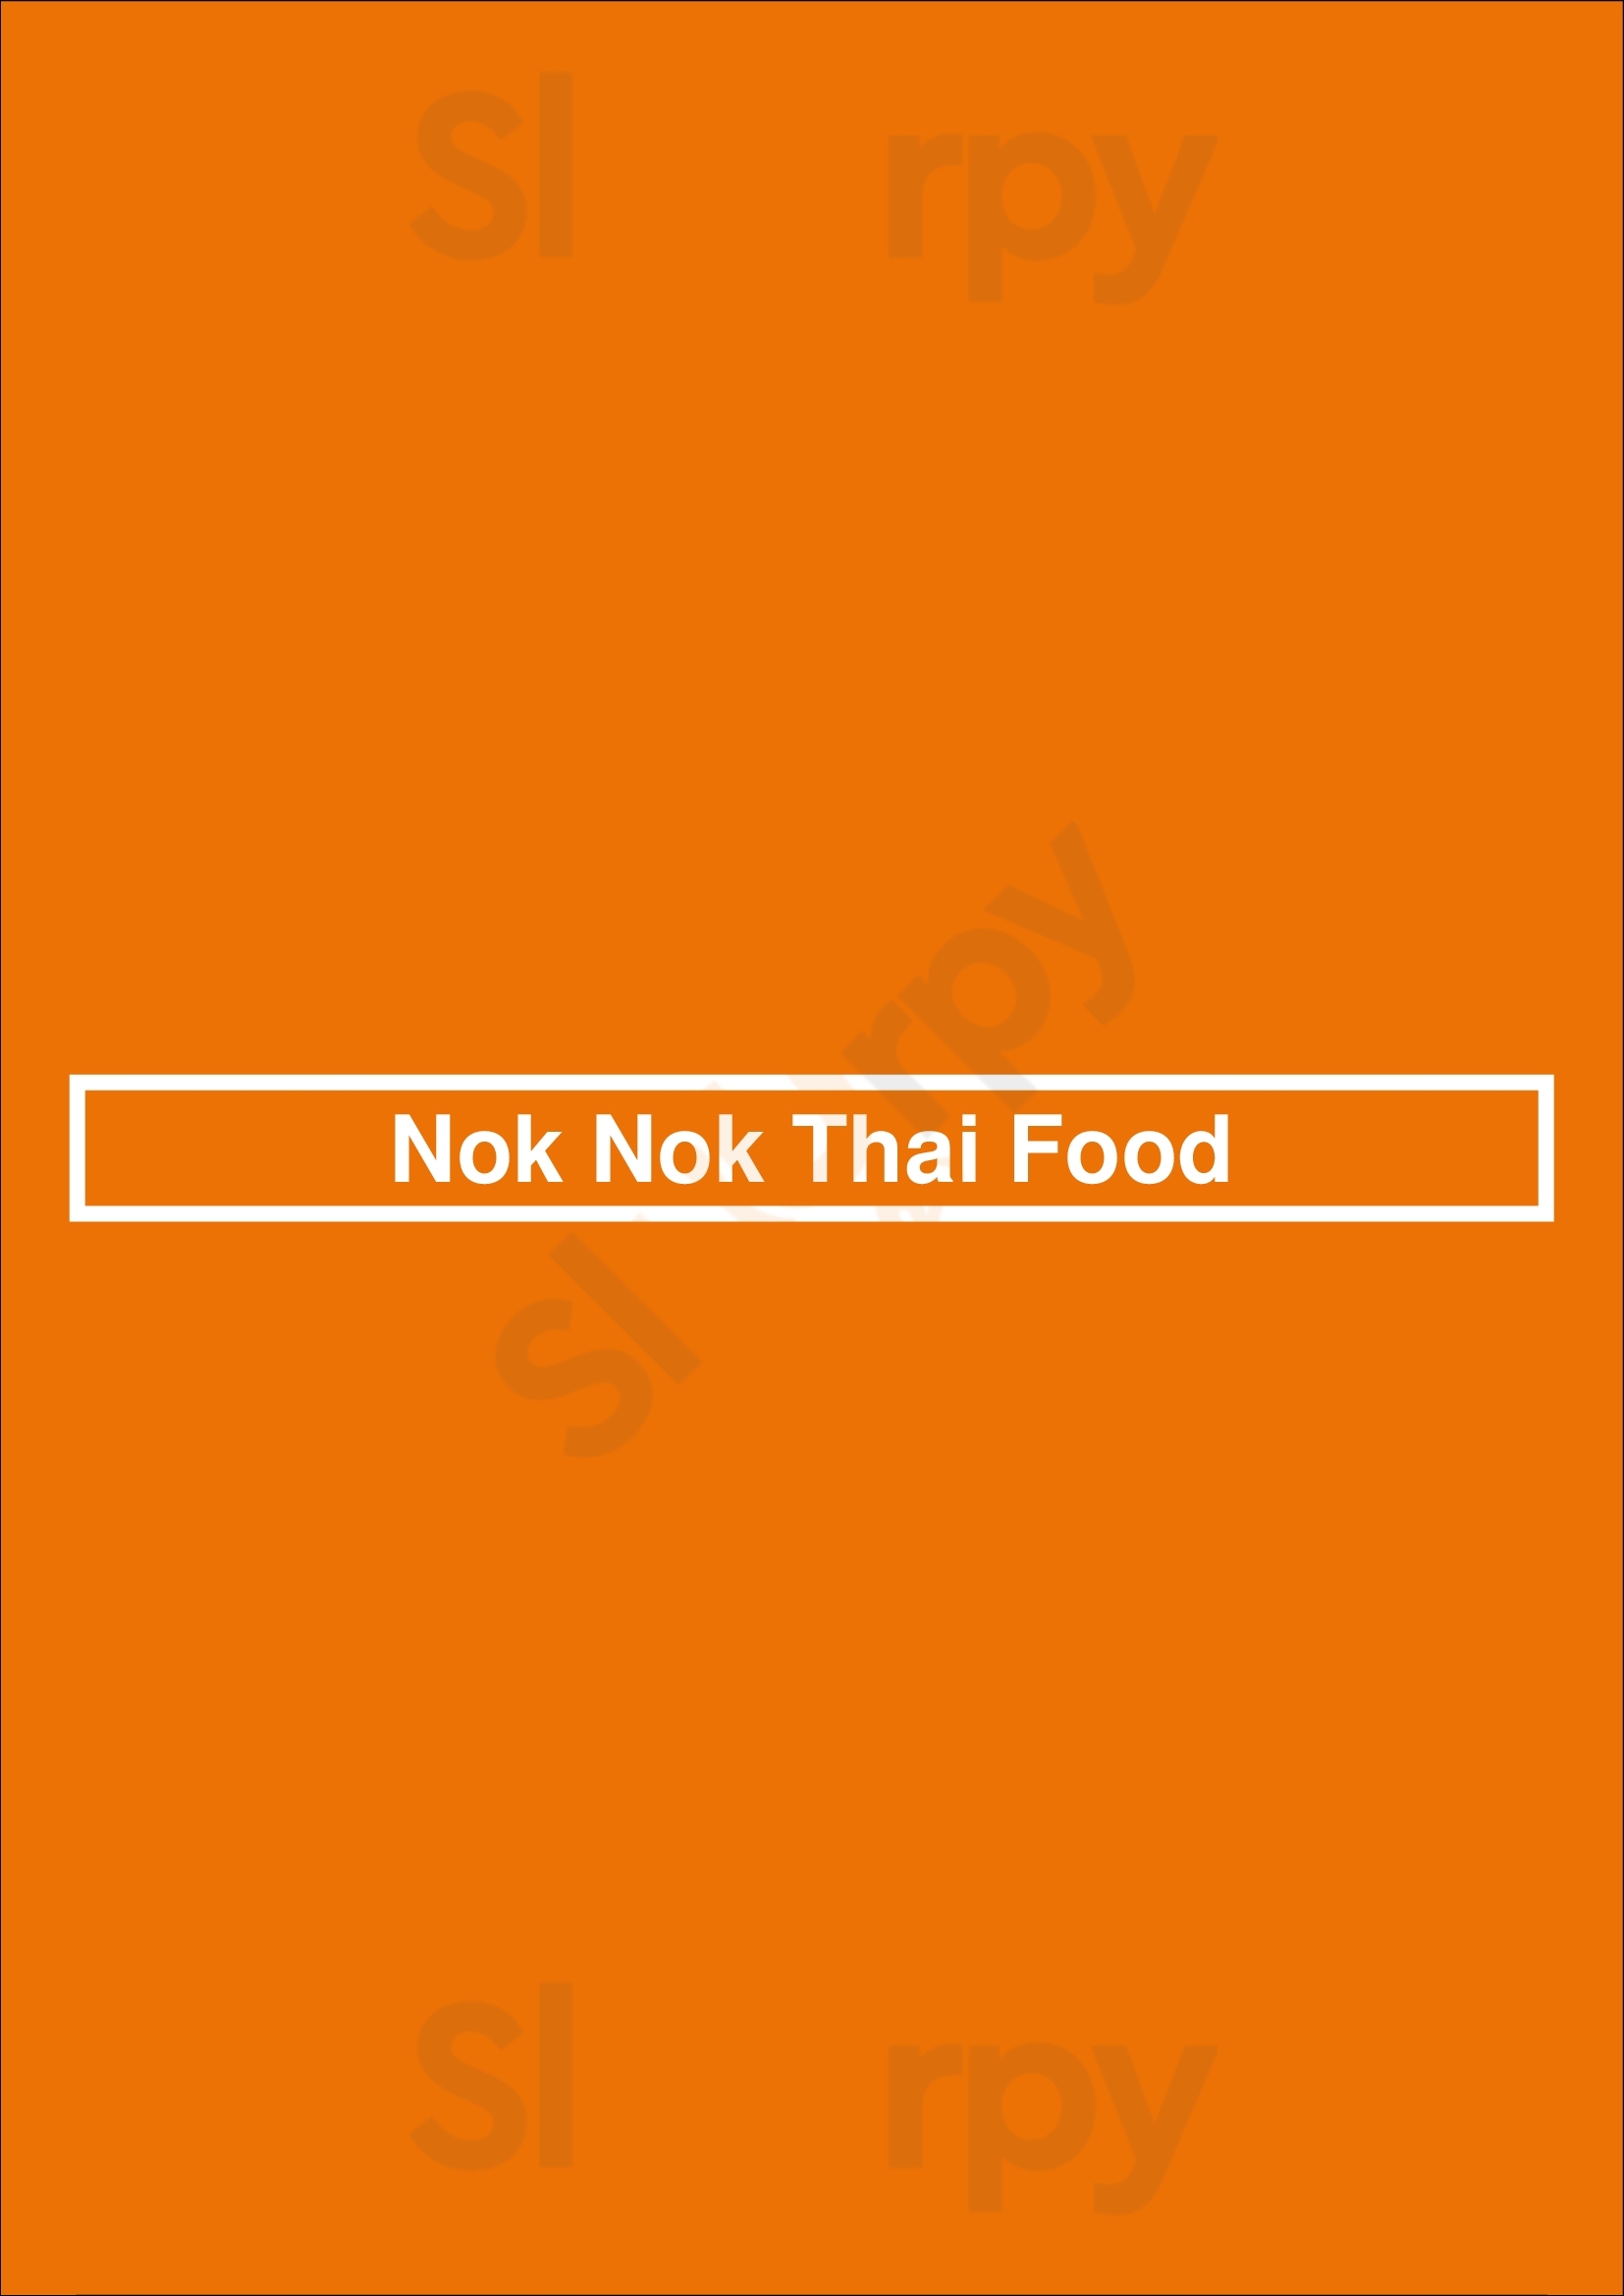 Nok Nok Thai Food Zaandam Menu - 1